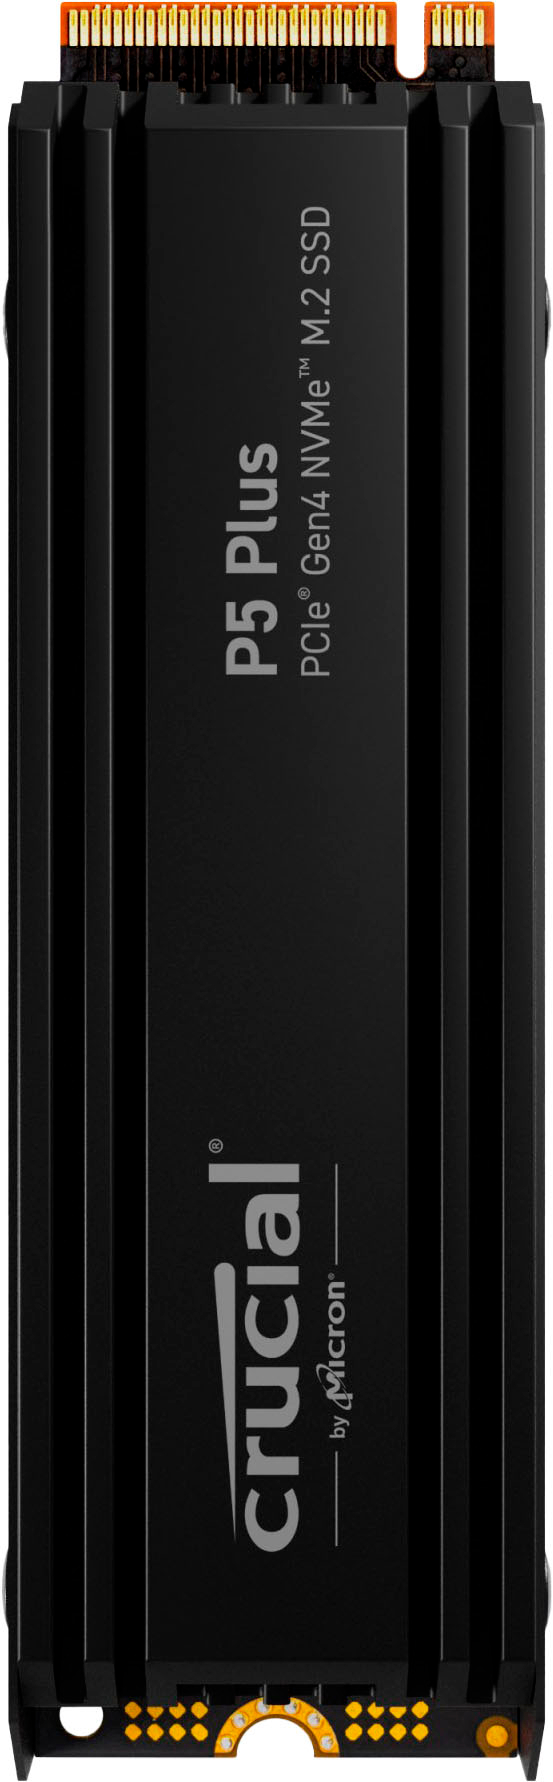 Crucial P5 Plus 2TB SSD Review - Elite Performance